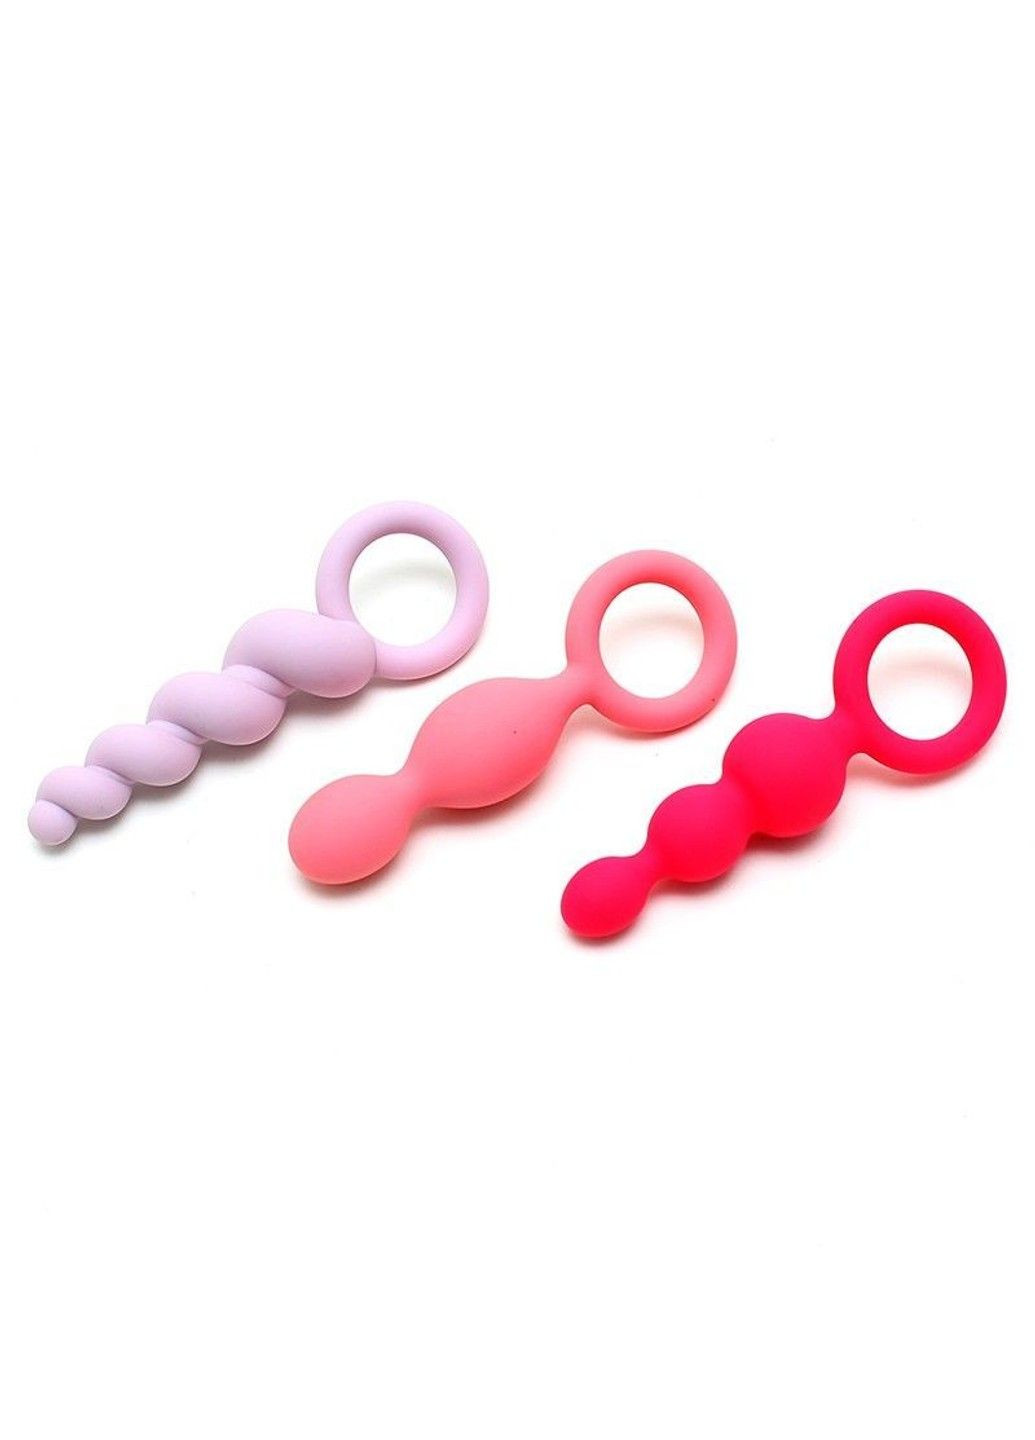 Набор анальных игрушек Plugs colored (set of 3) - Booty Call, макс. диаметр 3 см Satisfyer (293246168)